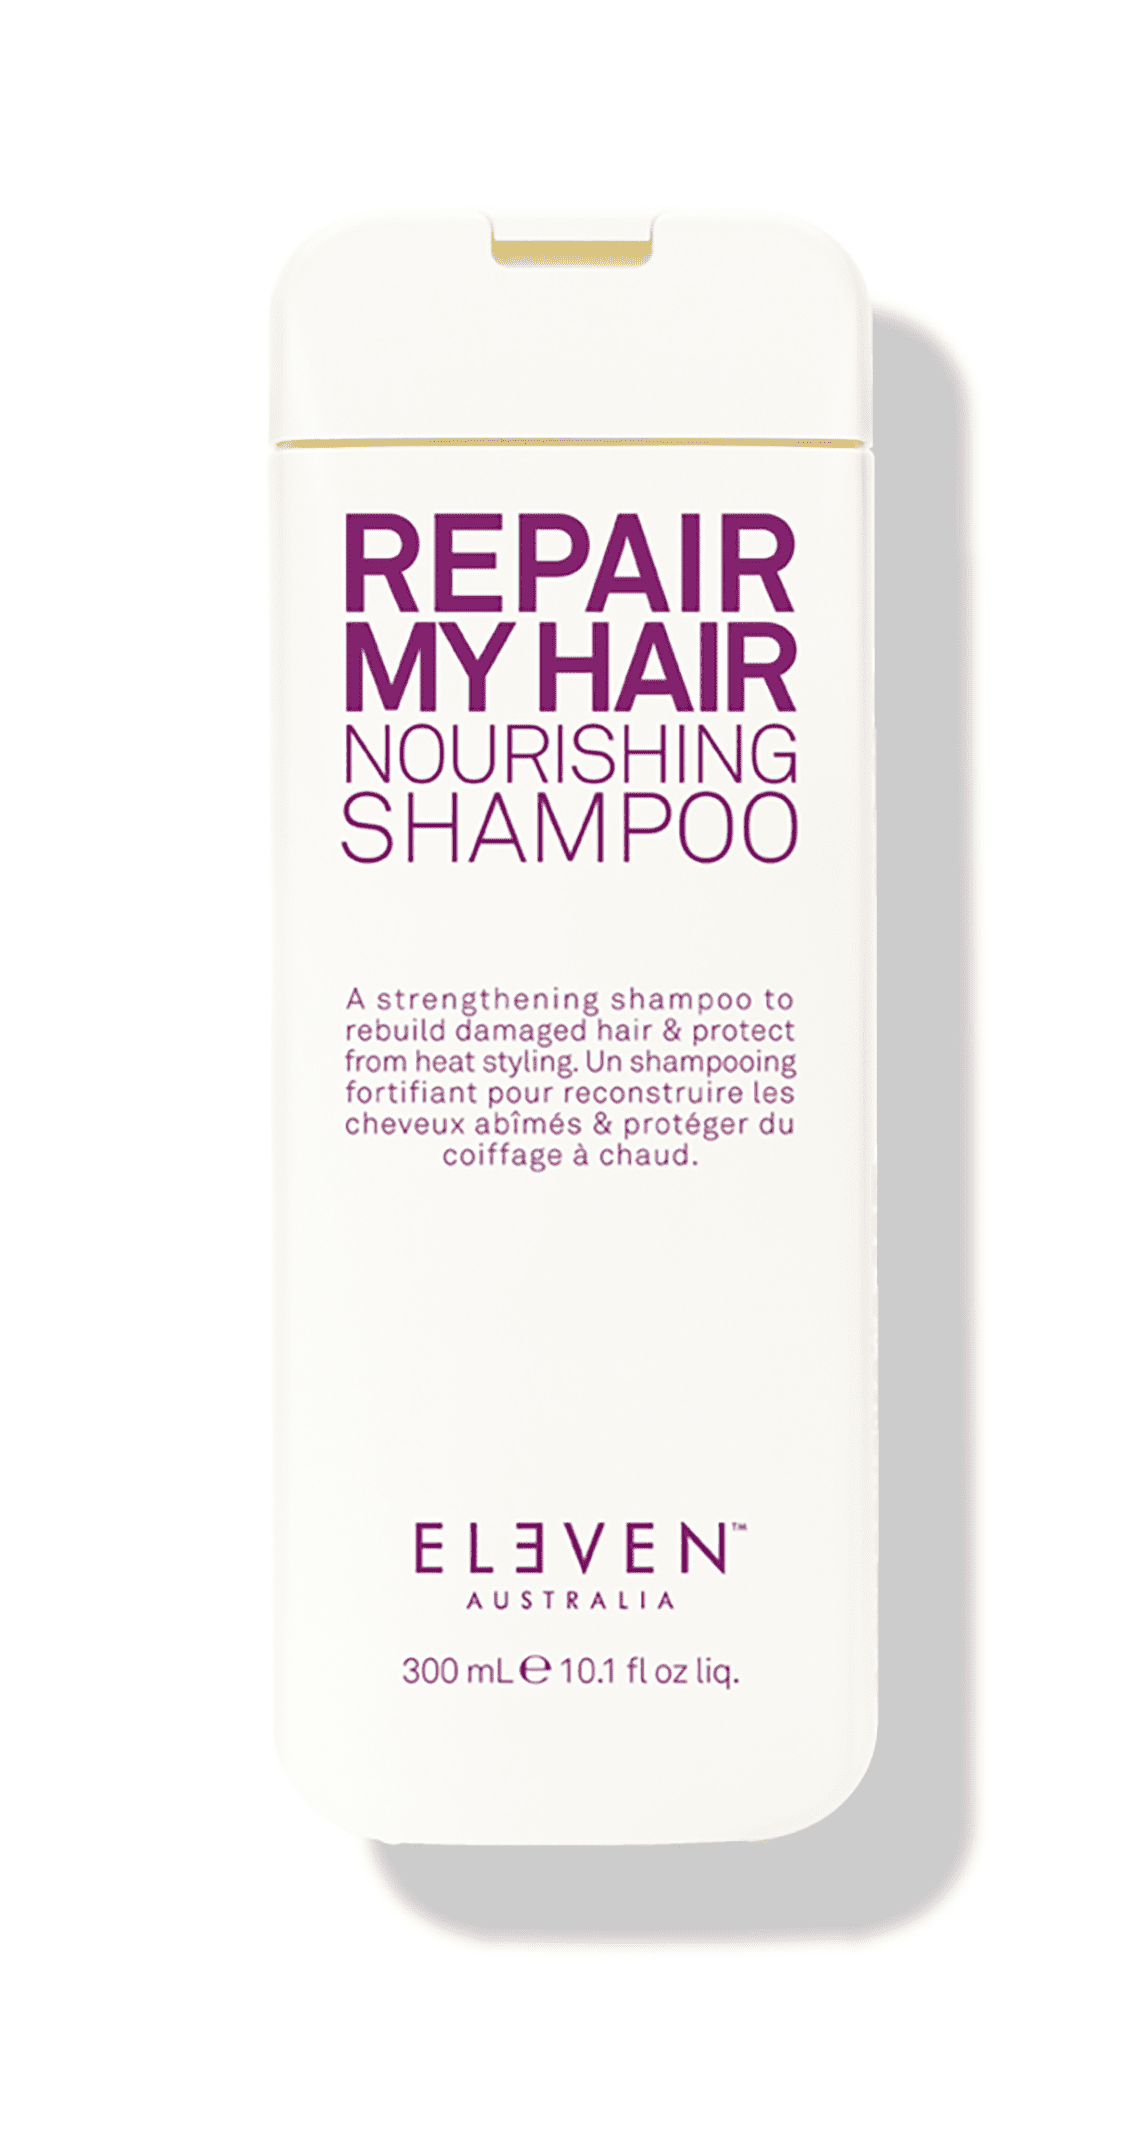 Repair My Hair Nourishing Shampoo - 300ml - ELEVEN Australia